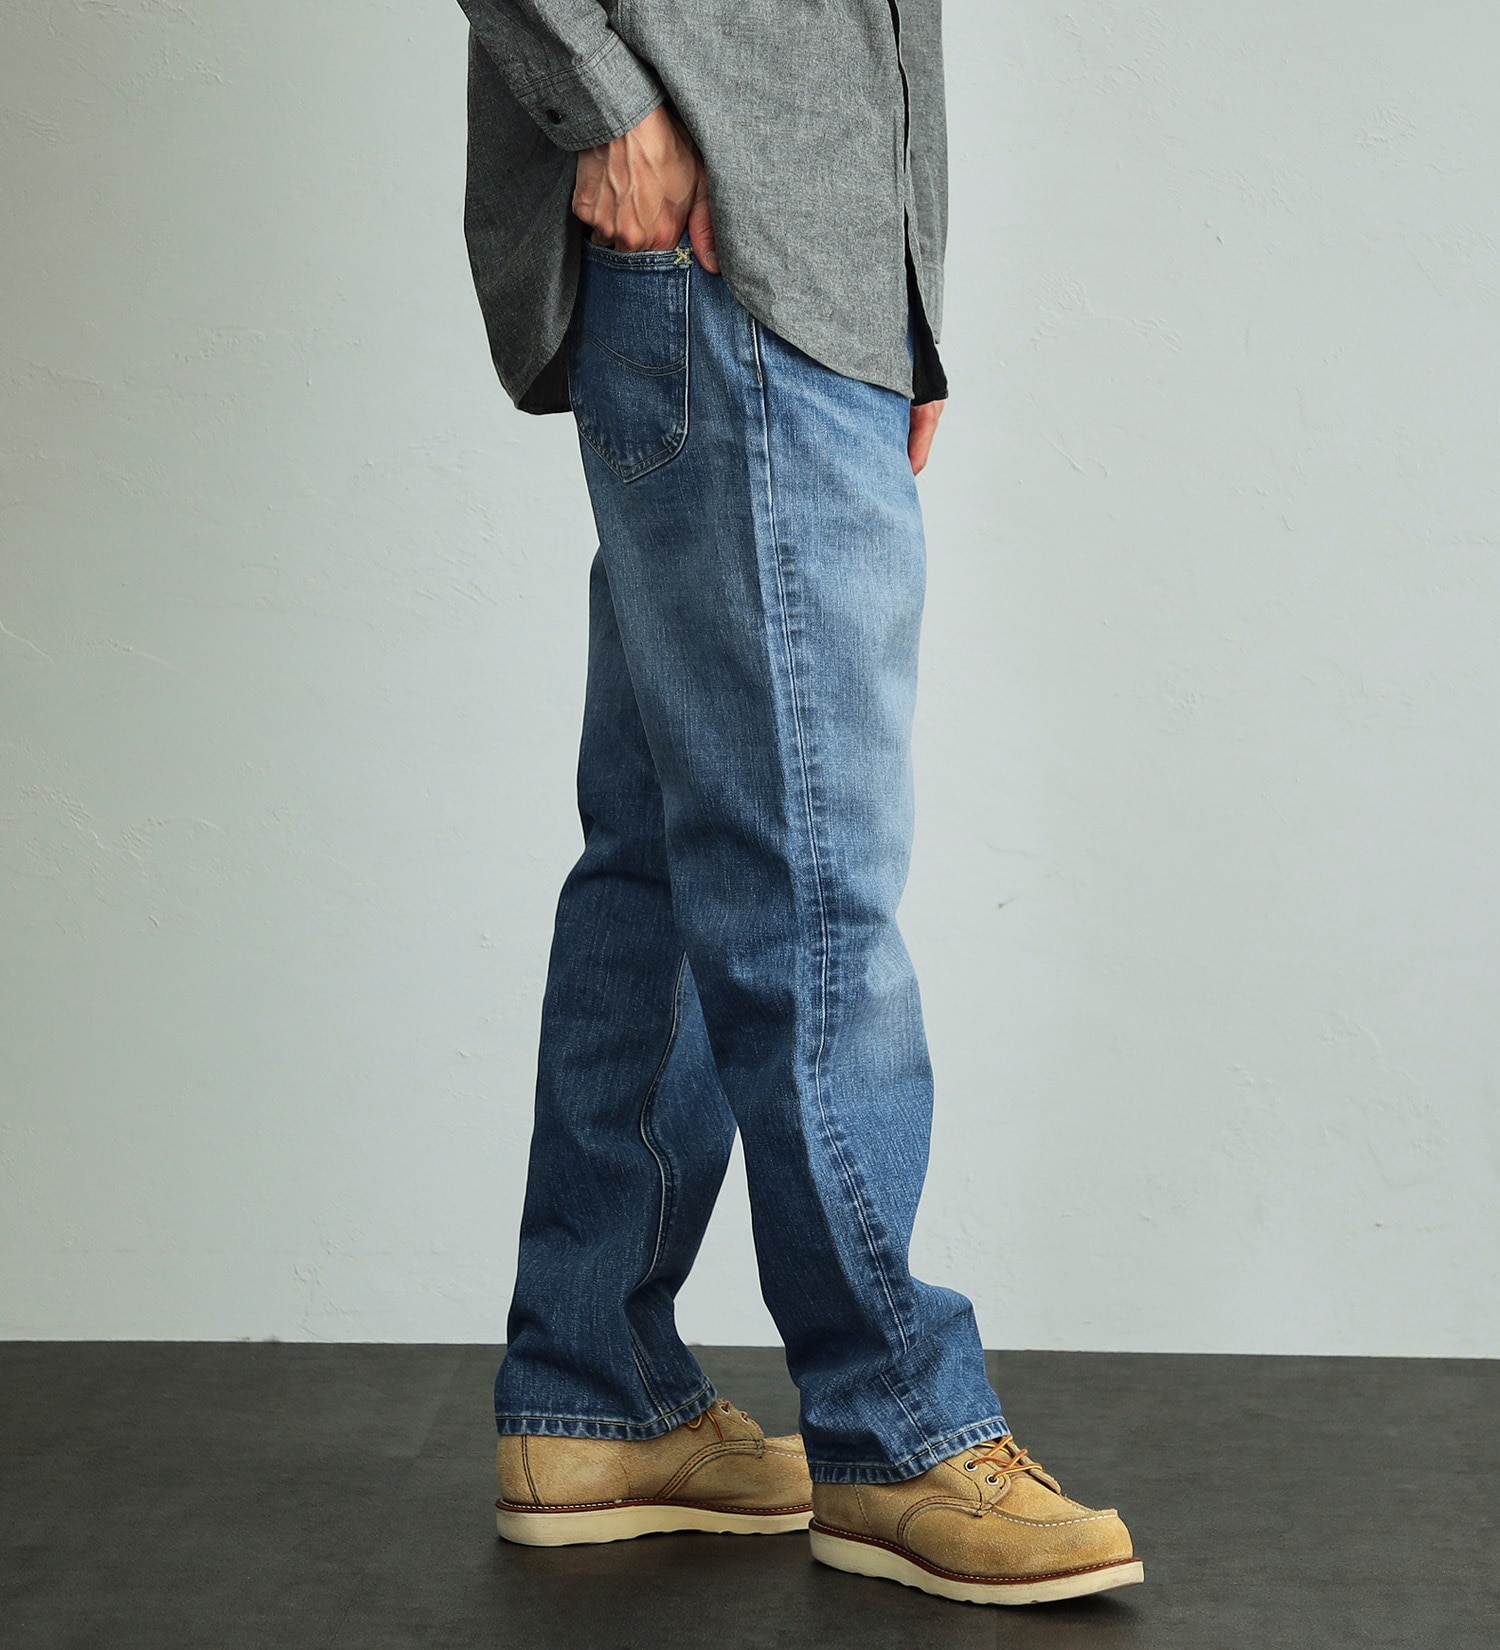 Lee(リー)の【試着対象】【股下長め(83cm)】AMERICAN RIDERS 101Z ストレートジーンズ|パンツ/デニムパンツ/メンズ|中色ブルー